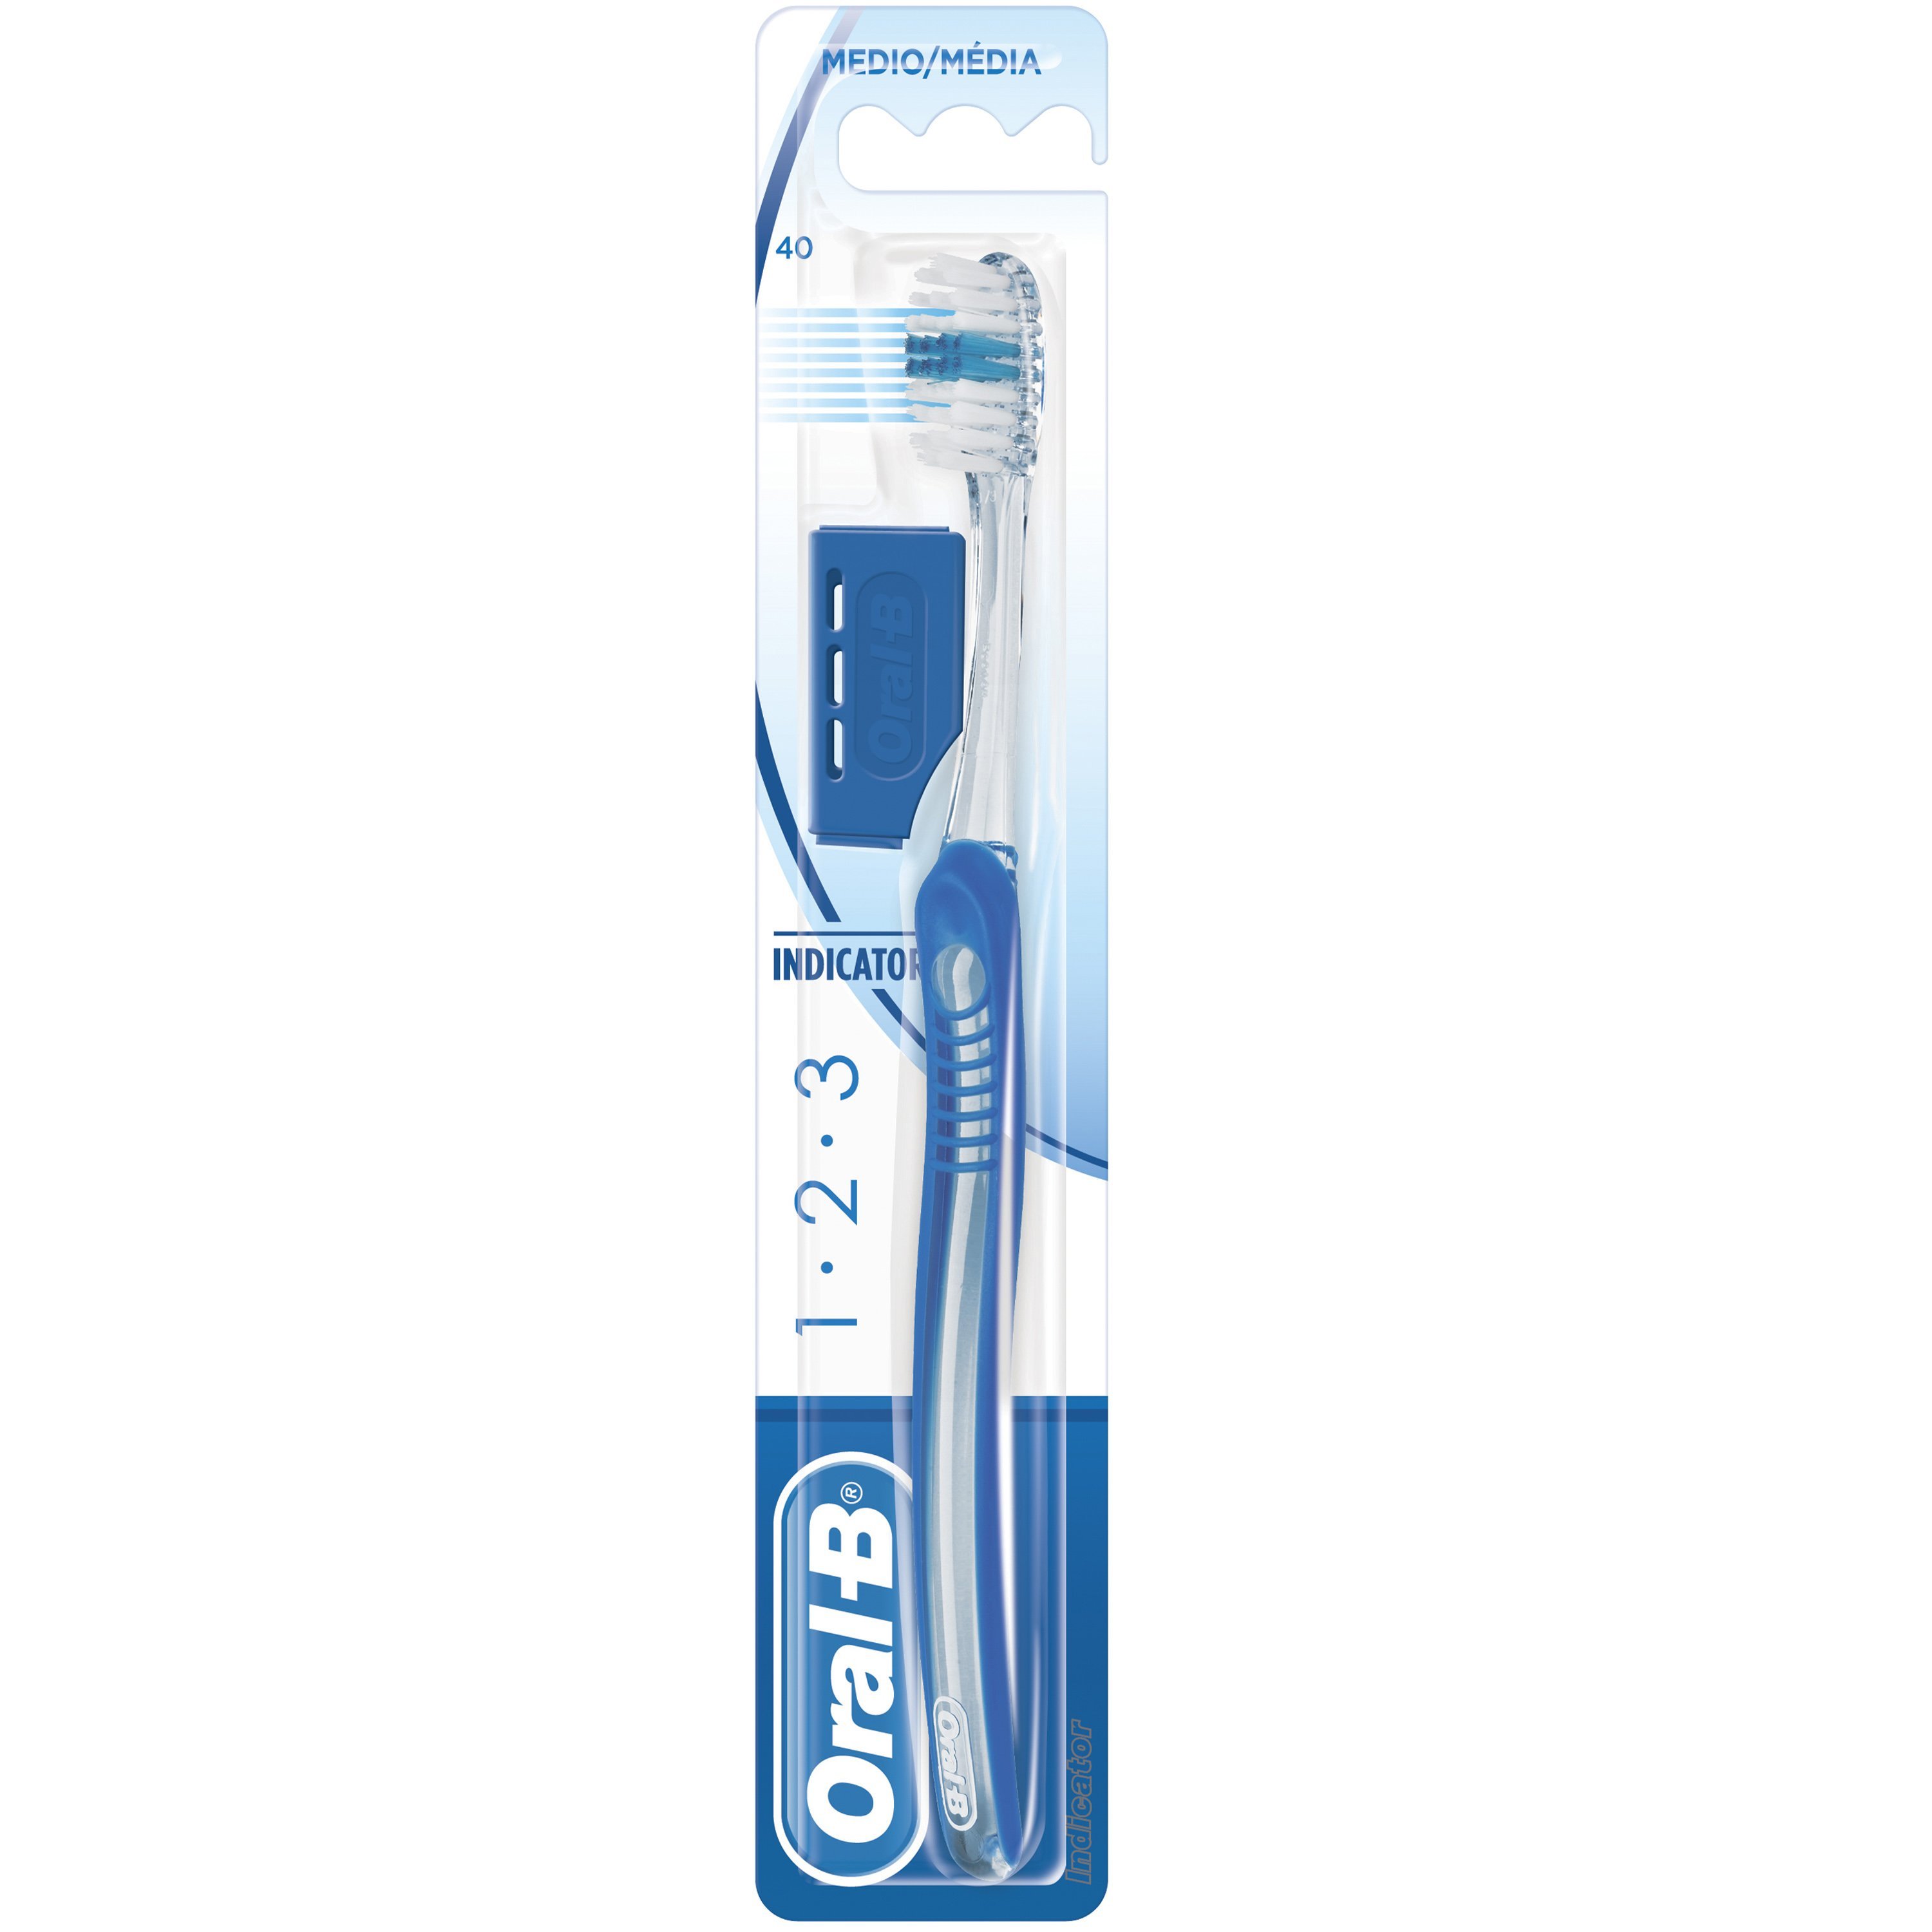 Oral-B 123 Indicator Medium Toothbrush 40mm Χειροκίνητη Οδοντόβουρτσα, Μέτρια 1 Τεμάχιο – Μπλε / Μπλε